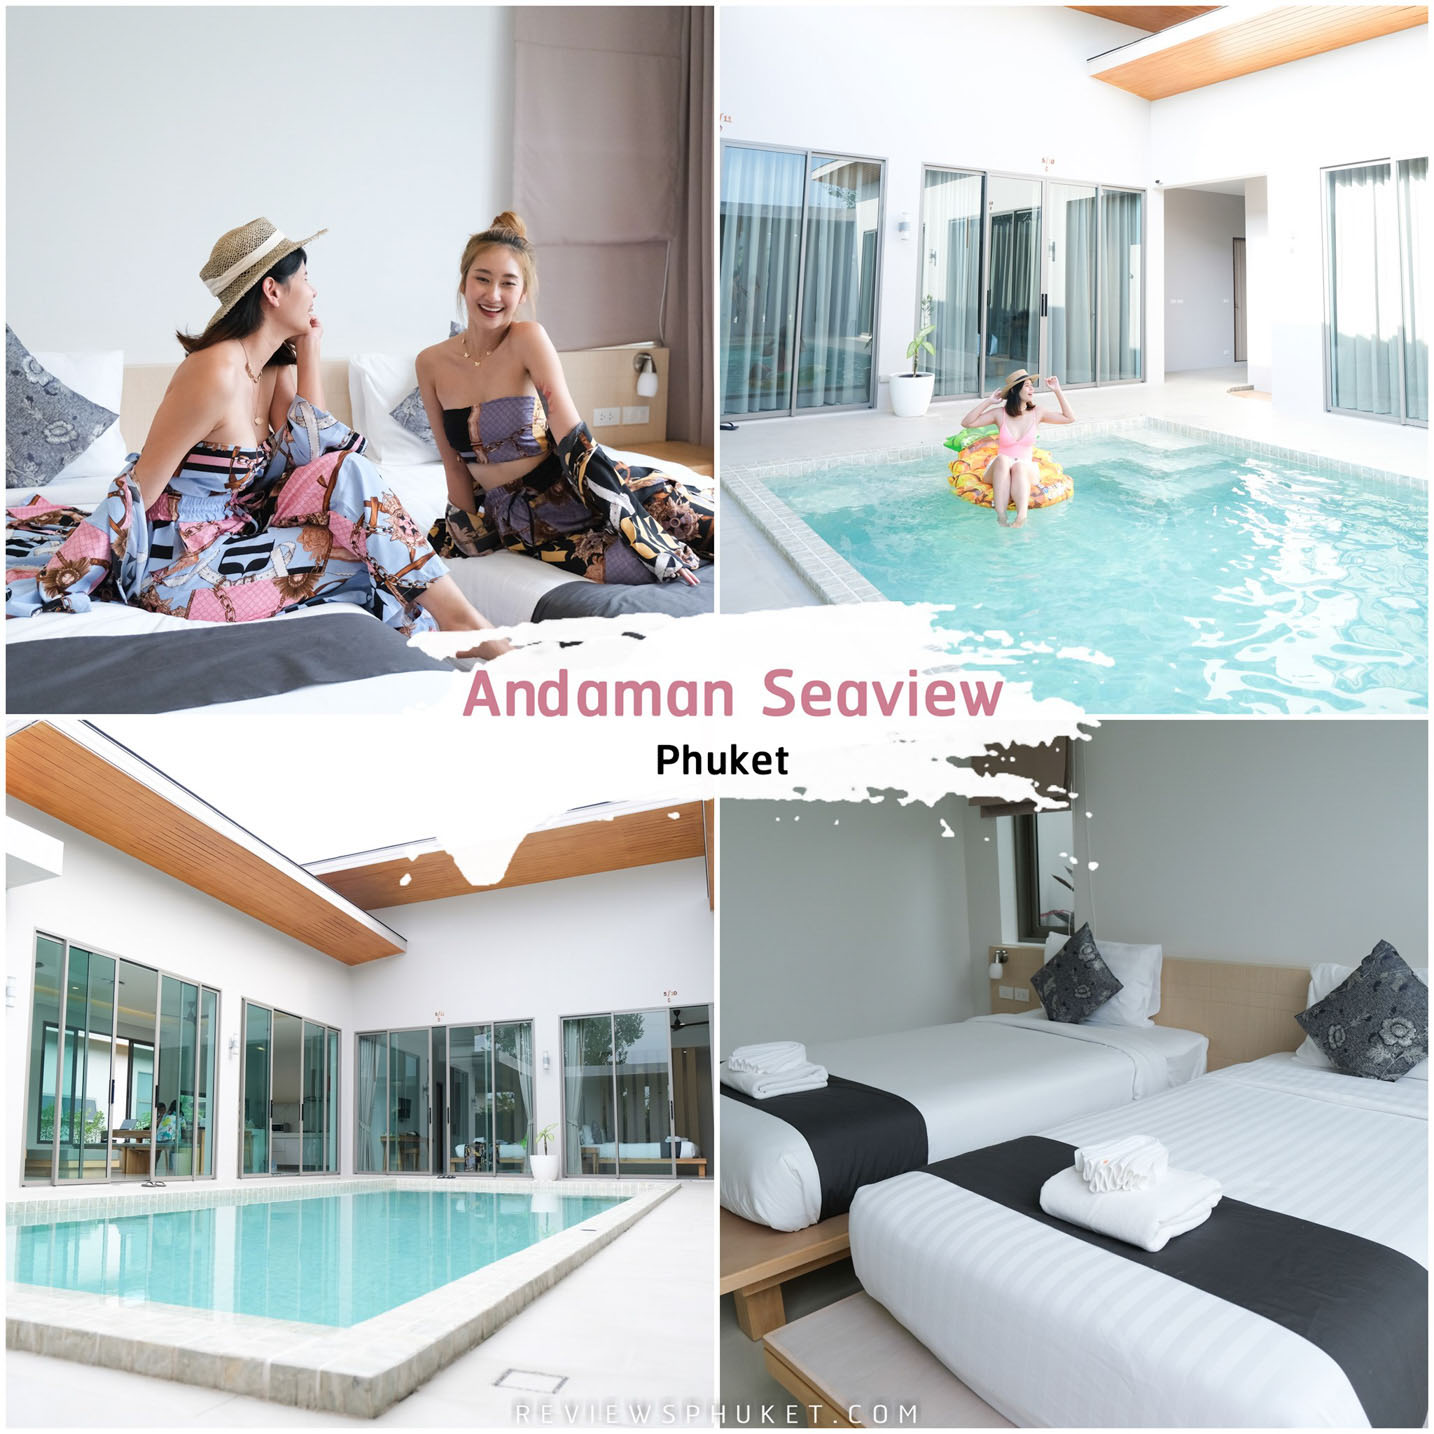 Andaman Seaview Phuket ที่พักภูเก็ตสุดสวย วิลล่าเด็ด